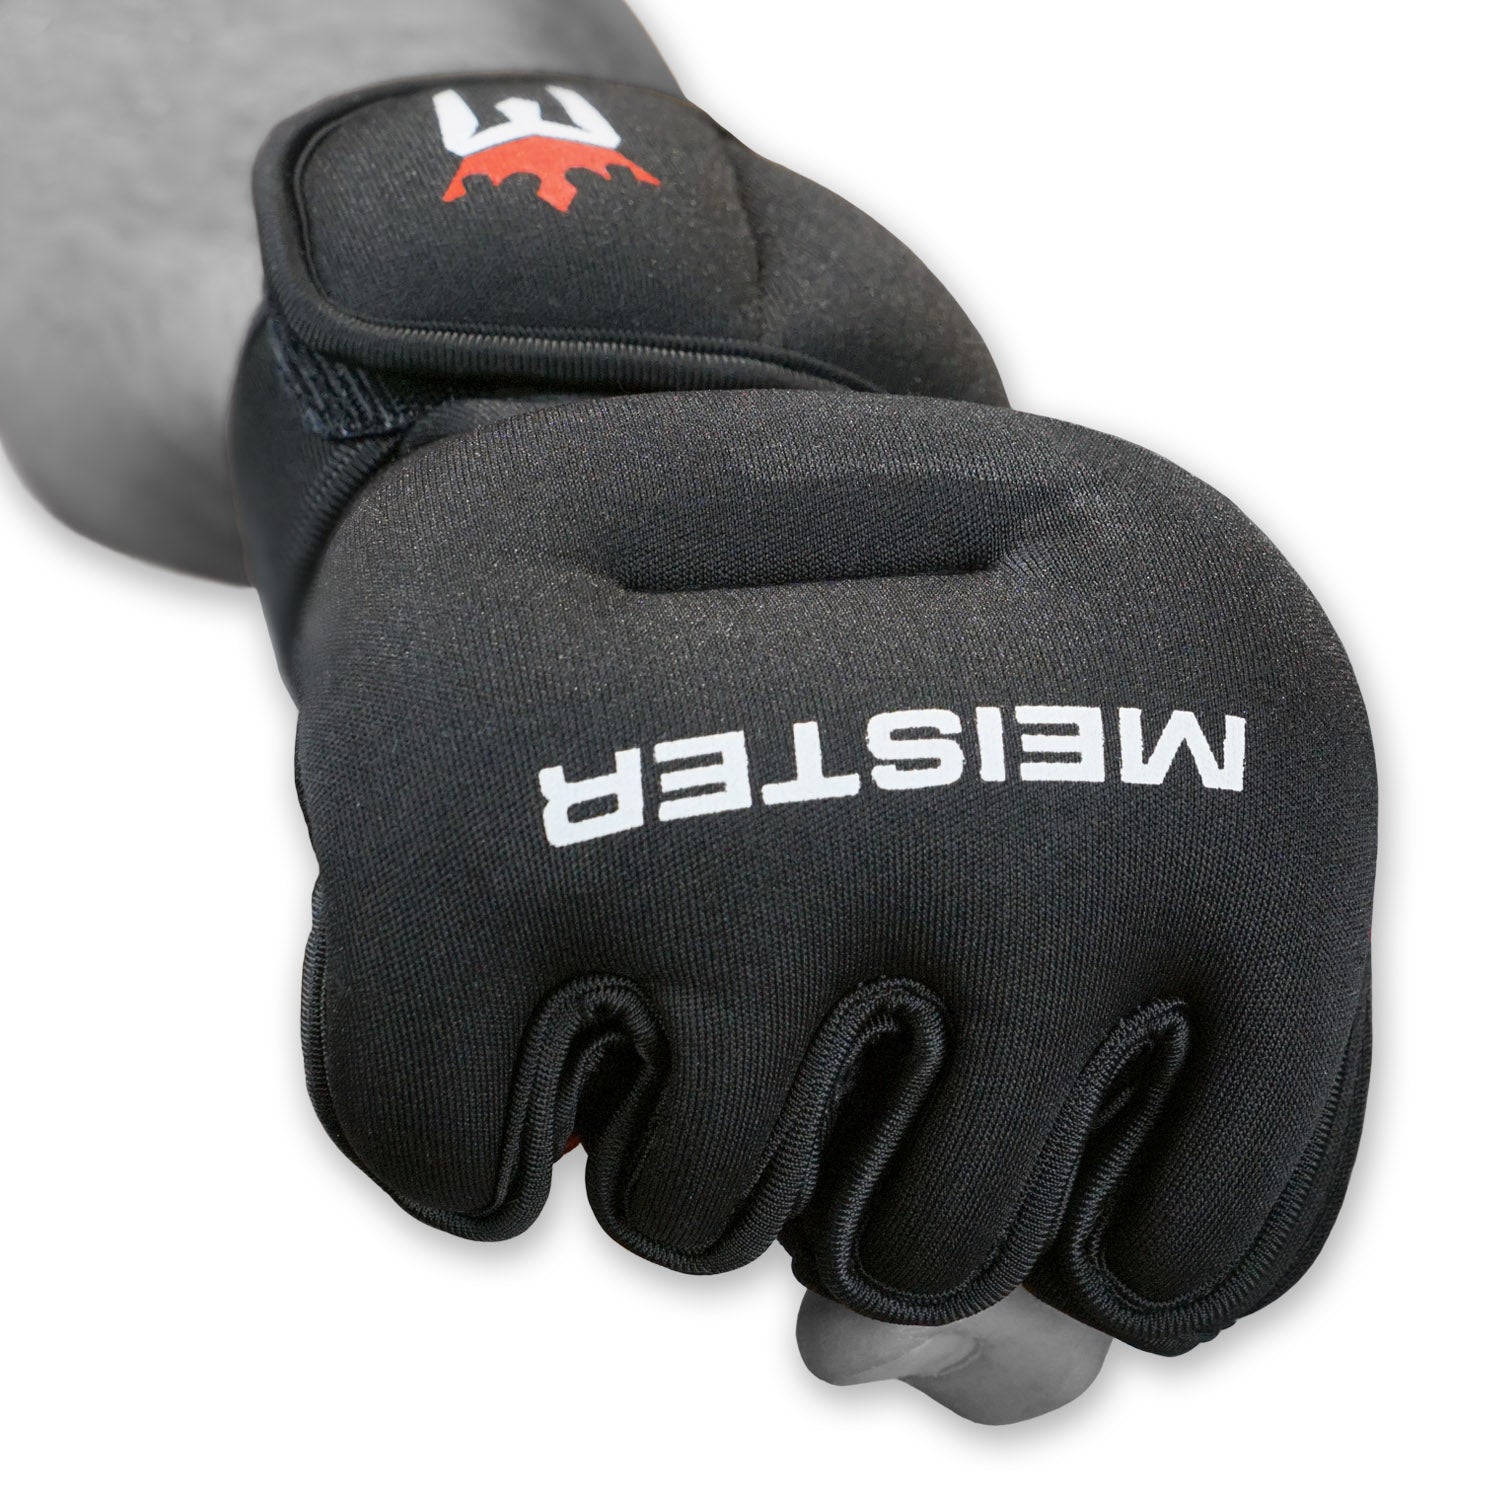 Meister 2lb Neoprene Weighted Gloves - Black/Red (Pair)